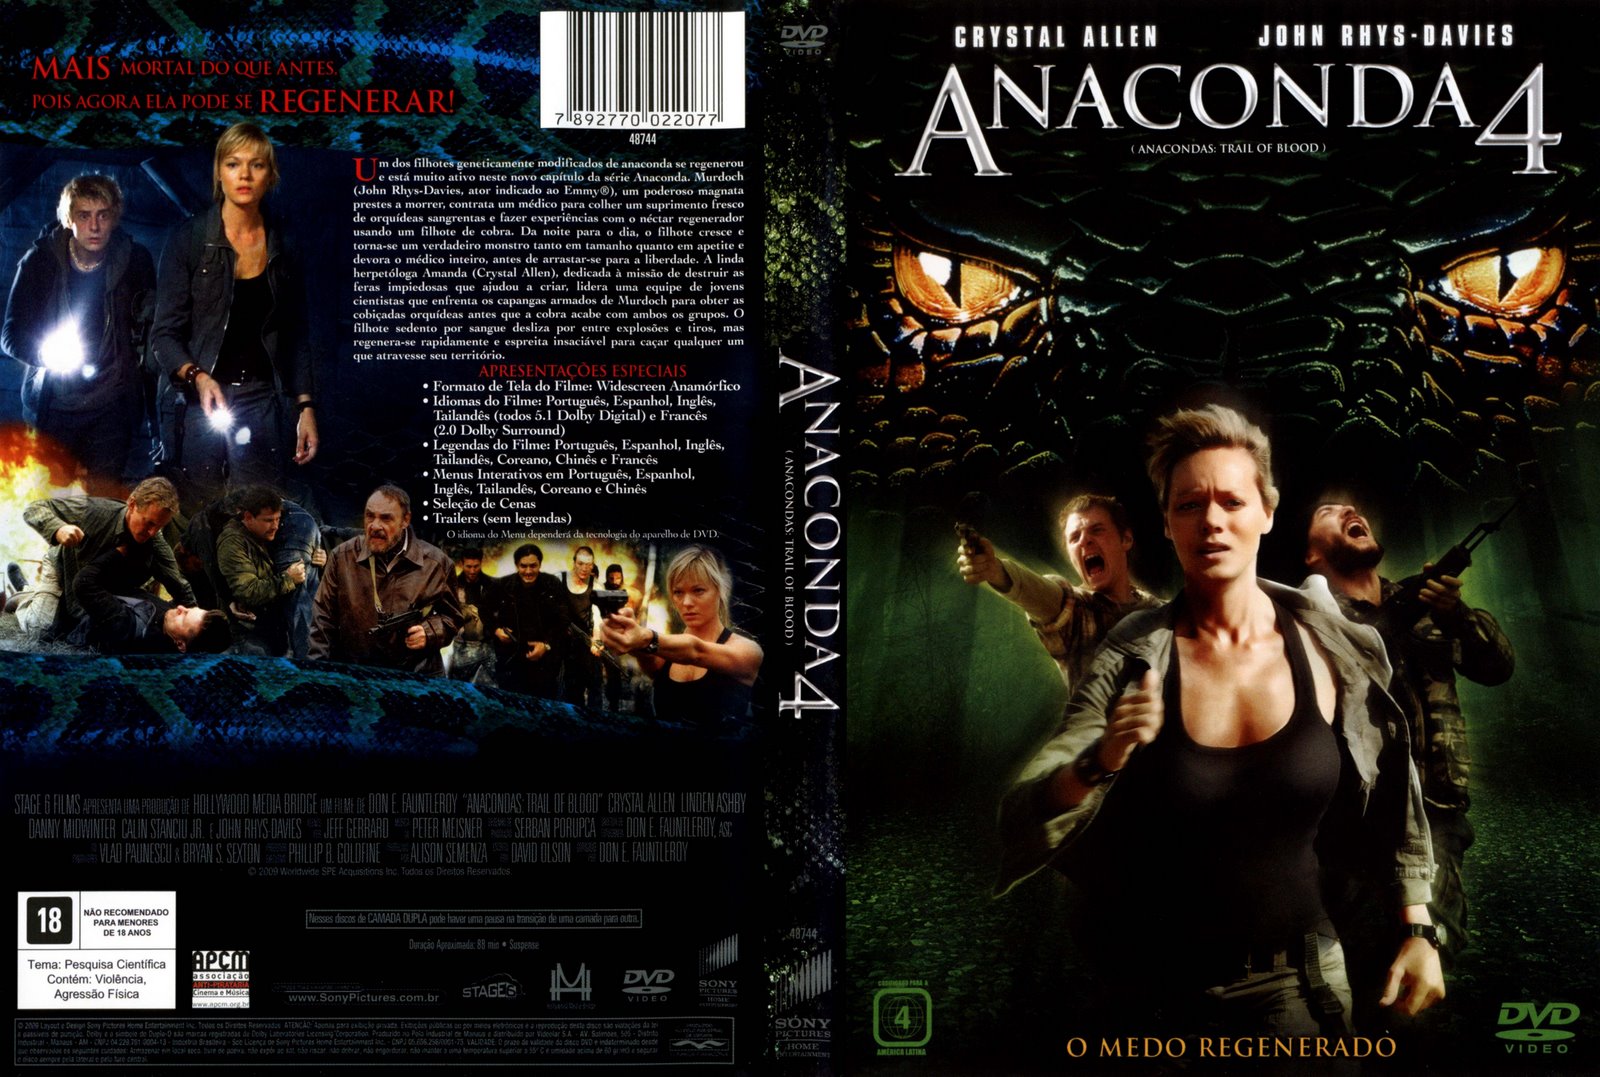 Amazoncom: Anacondas: Trail of Blood: Crystal Allen